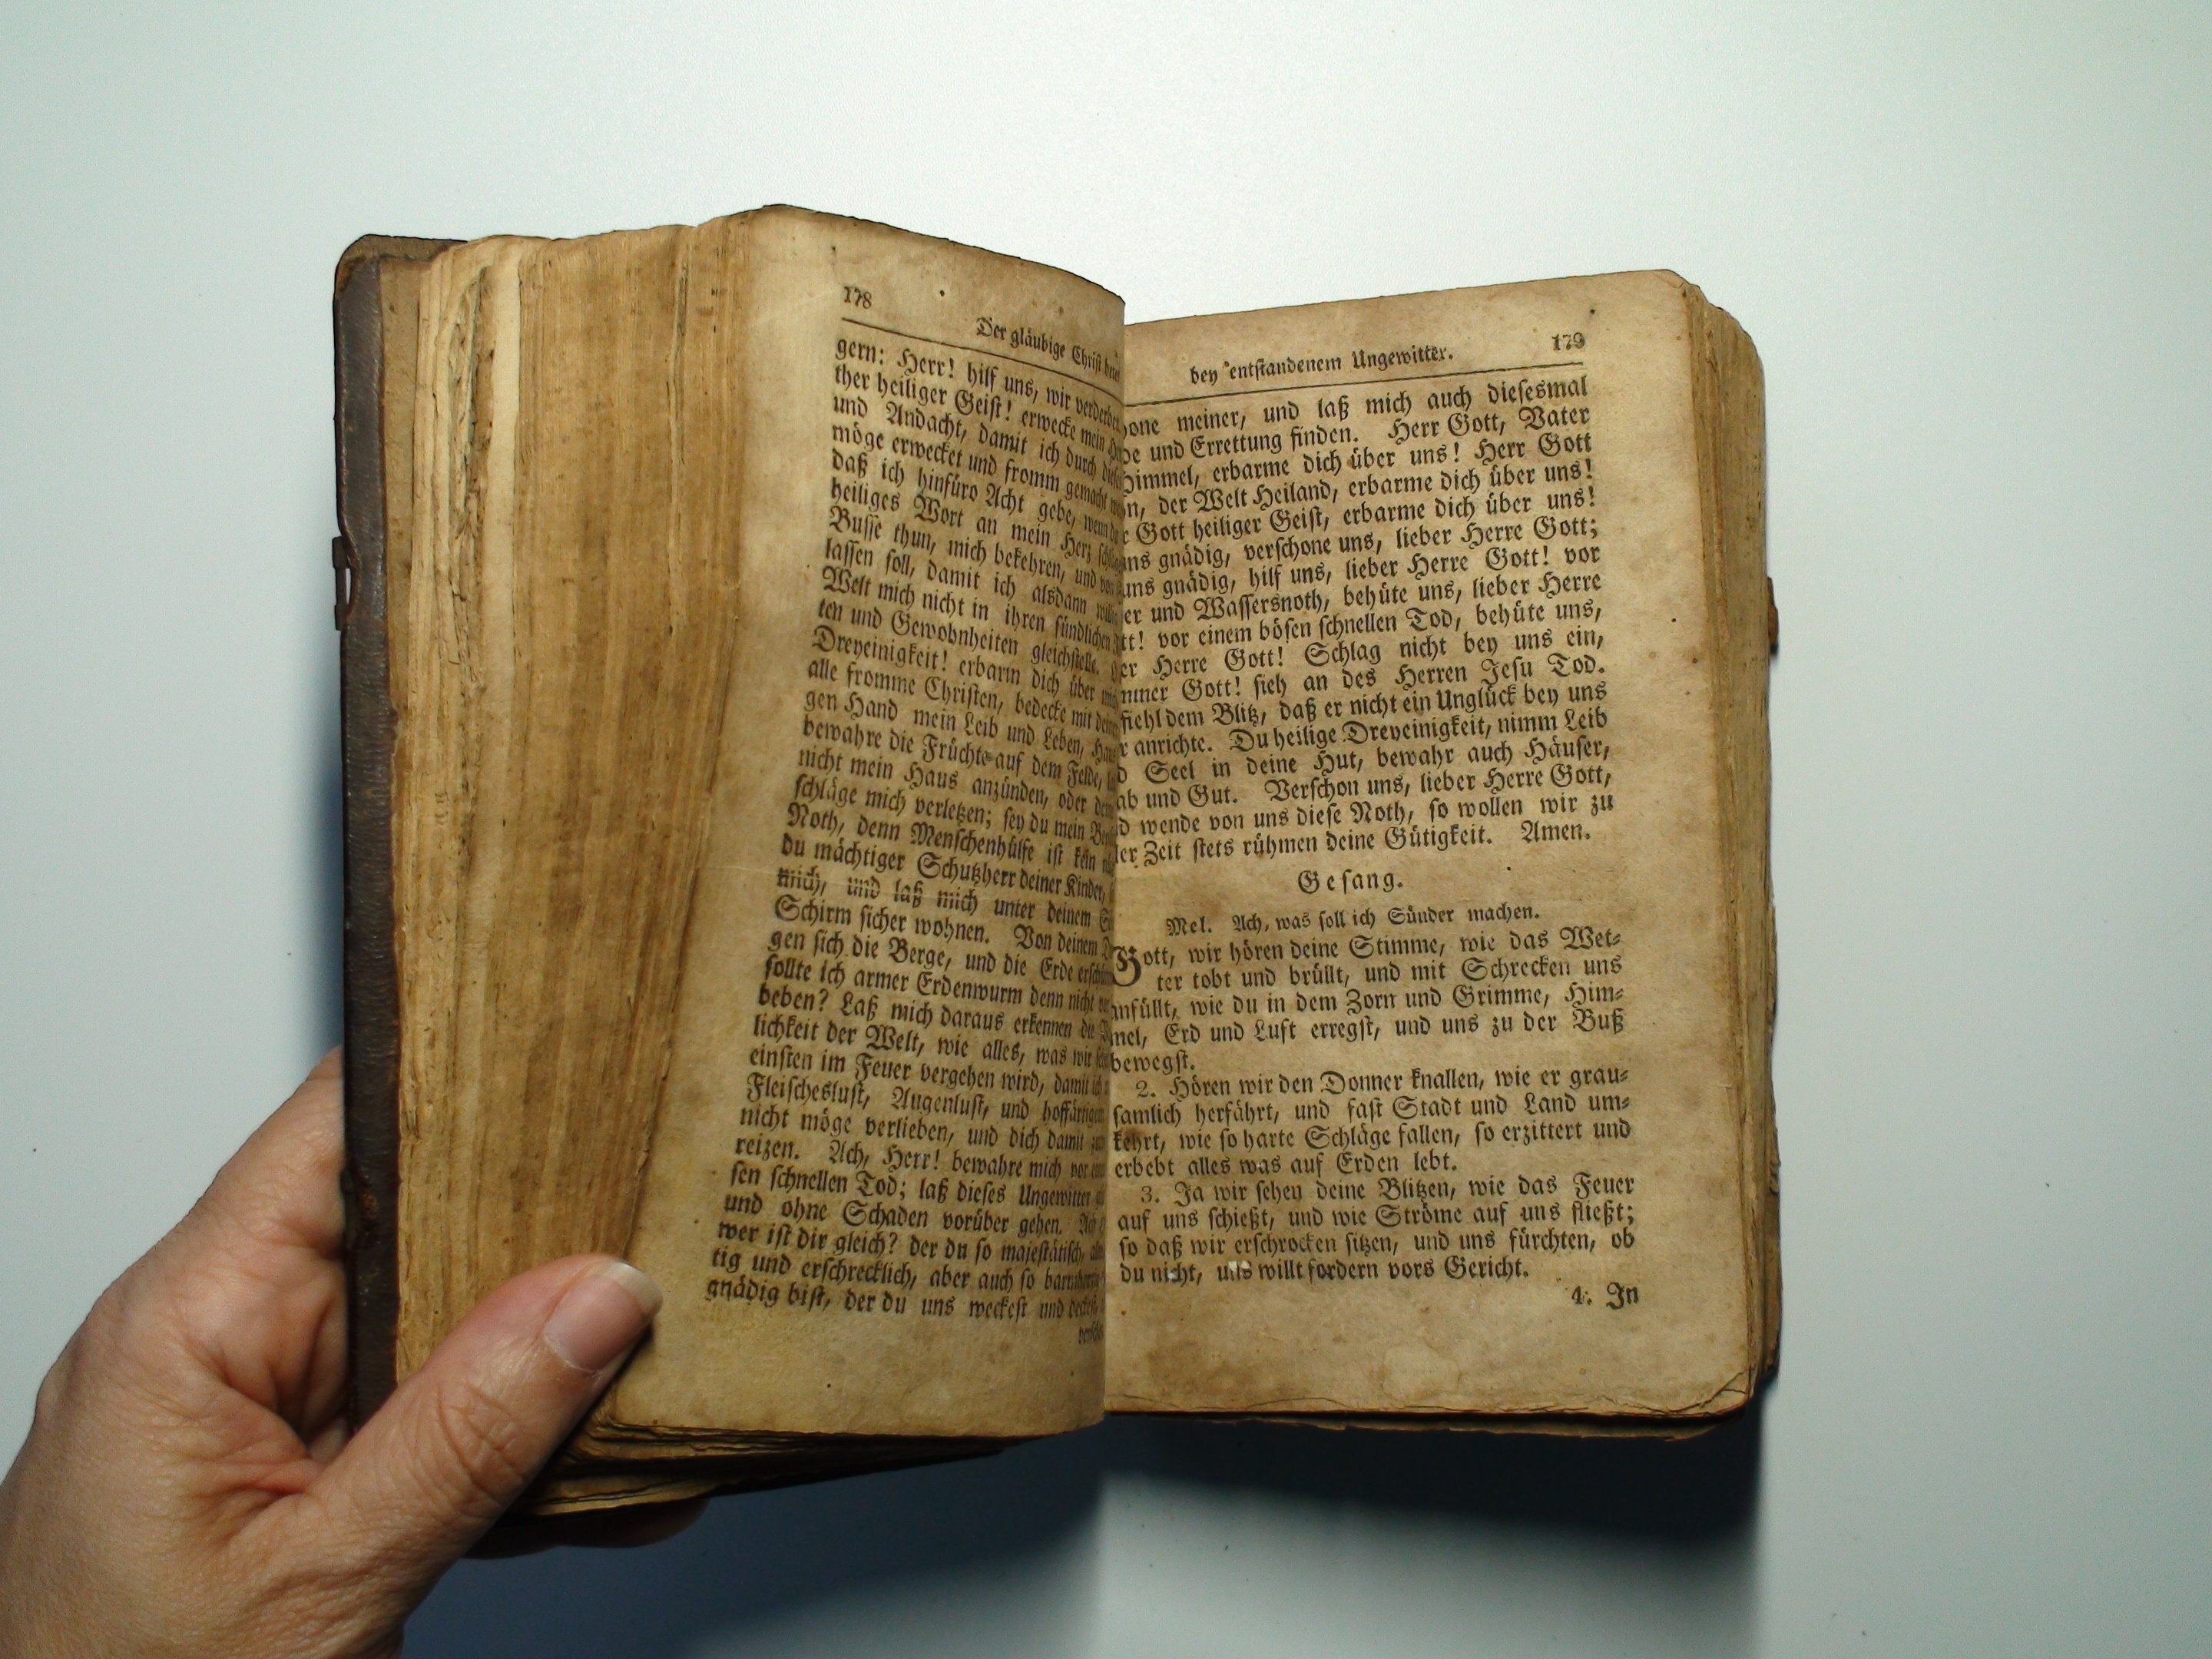 Tägliches Hand-Buch, Johann Friedrich Starck, Rare Religious Book, 1812